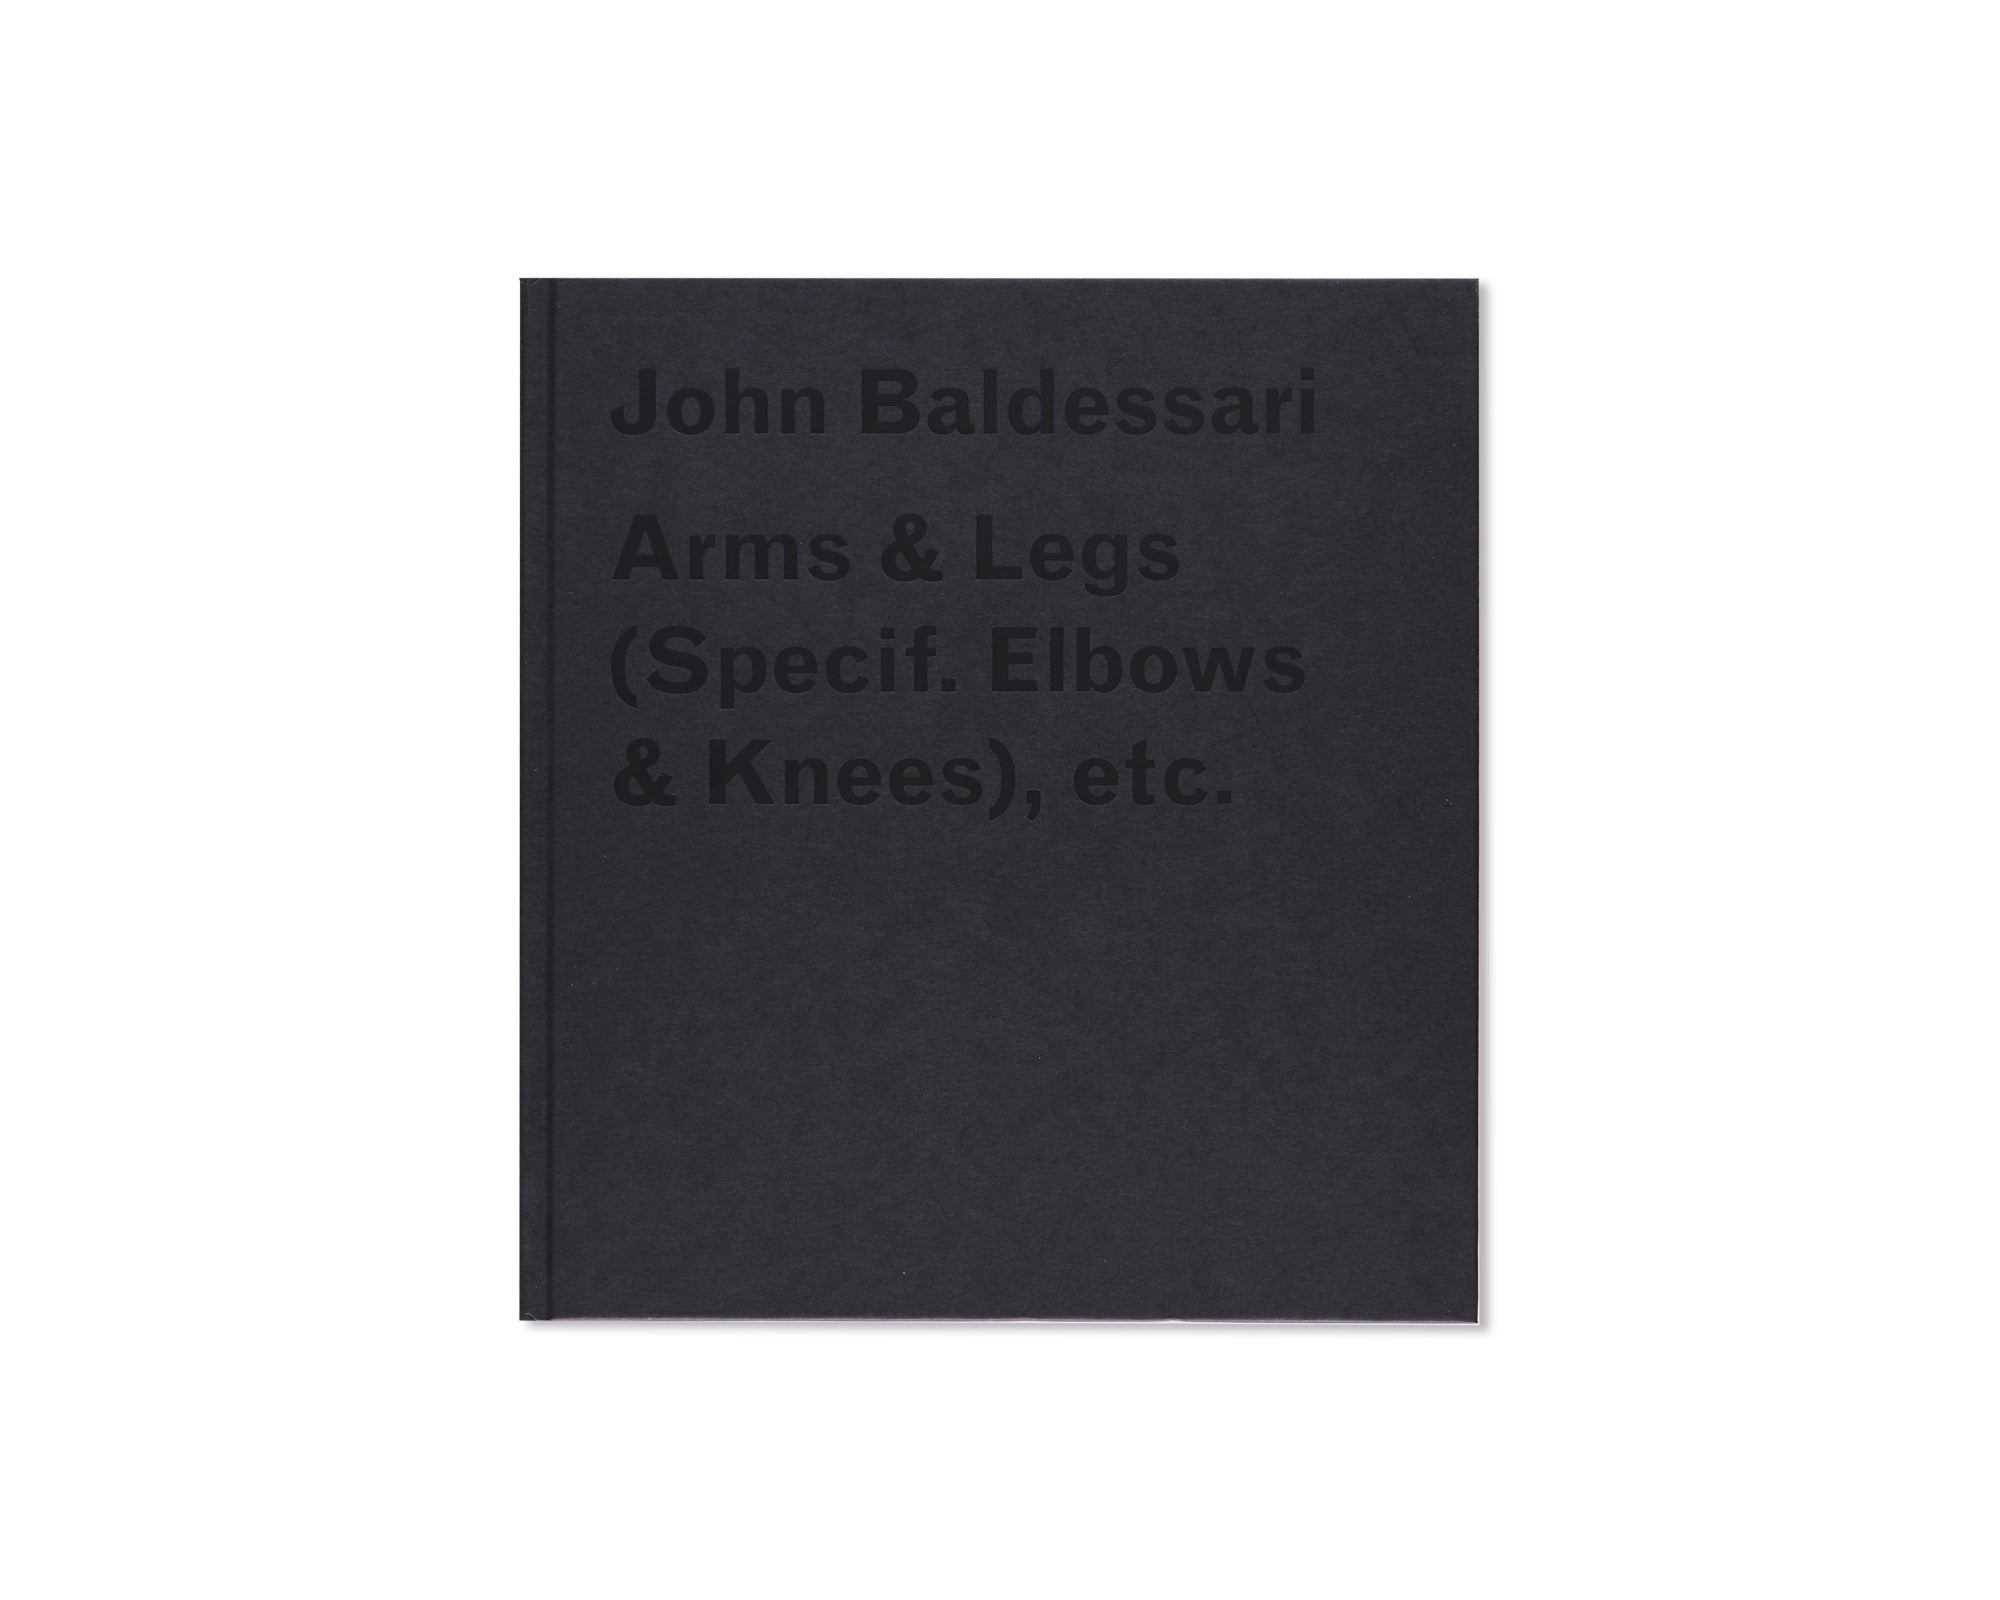 ARMS AND LEGS (SPECIF. ELBOWS & KNEES), ETC. by John Baldessari